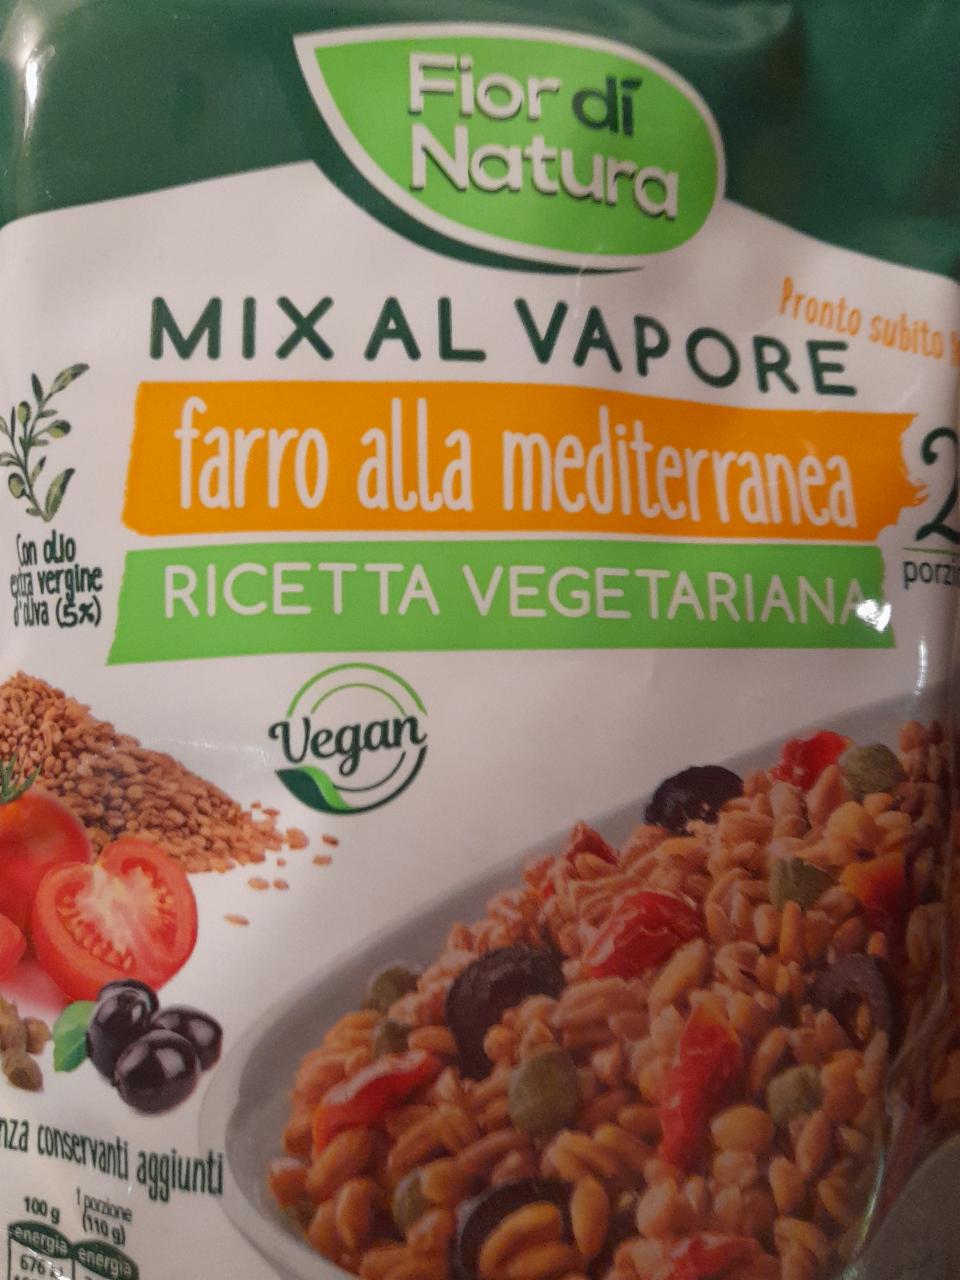 Fotografie - Mix al vapore farro alla mediterranea ricetta vegetariana Fior di Natura